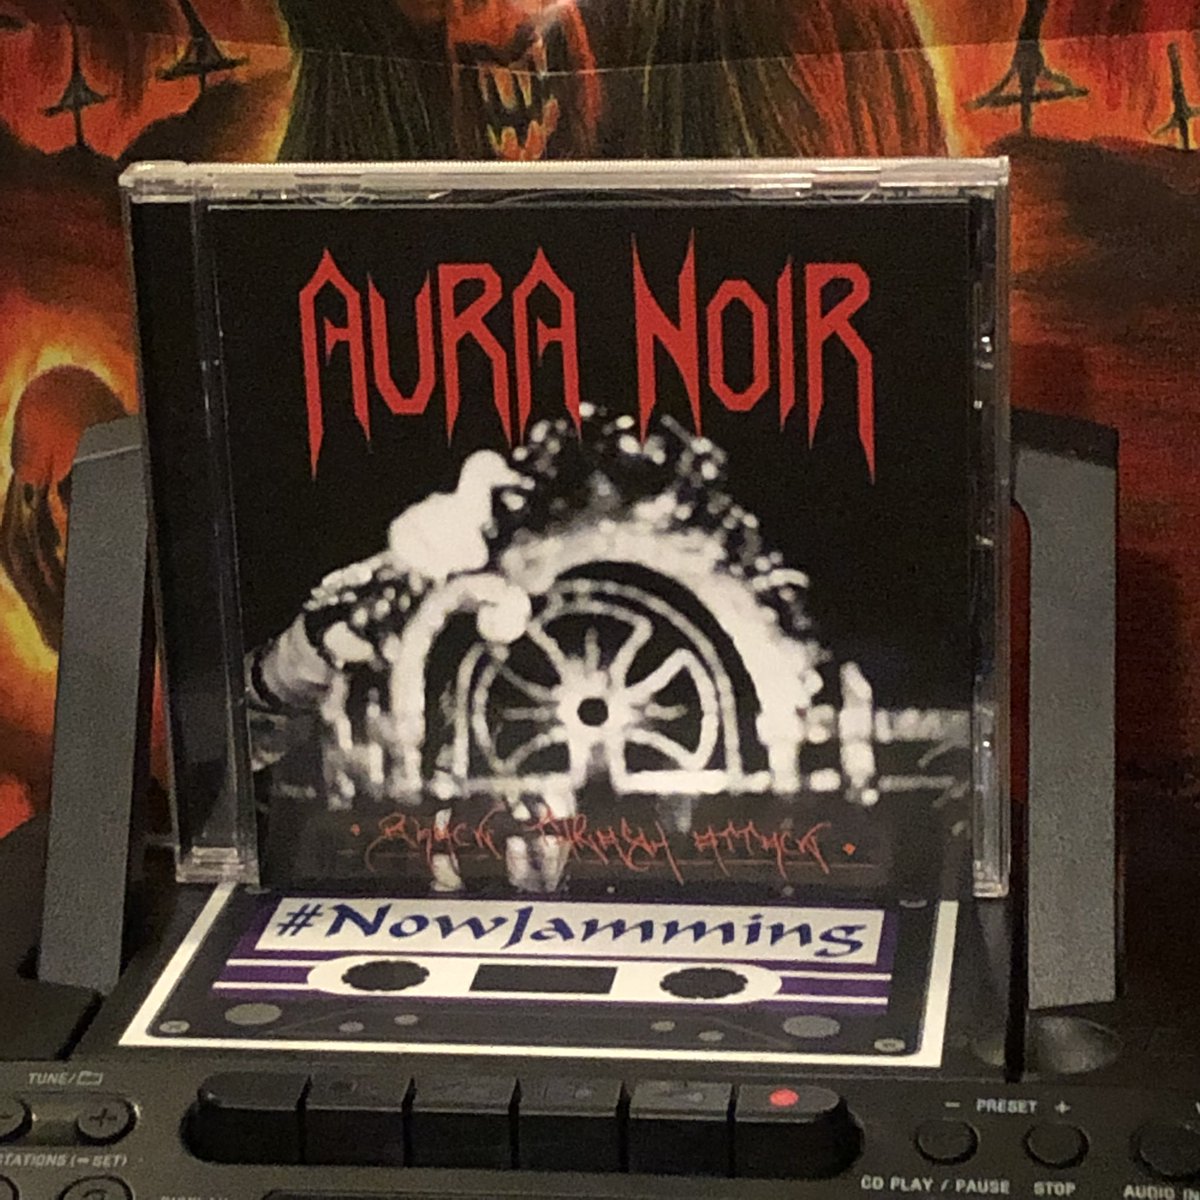 #NowJamming #AuraNoir #BlackThrashAttack #BlackThrashMetal #Norway #1996 #PeacevilleRecords #CD

youtu.be/i-kKaJ21gbw

music.amazon.com/albums/B01MS9F…

open.spotify.com/album/1c17Lkvt…